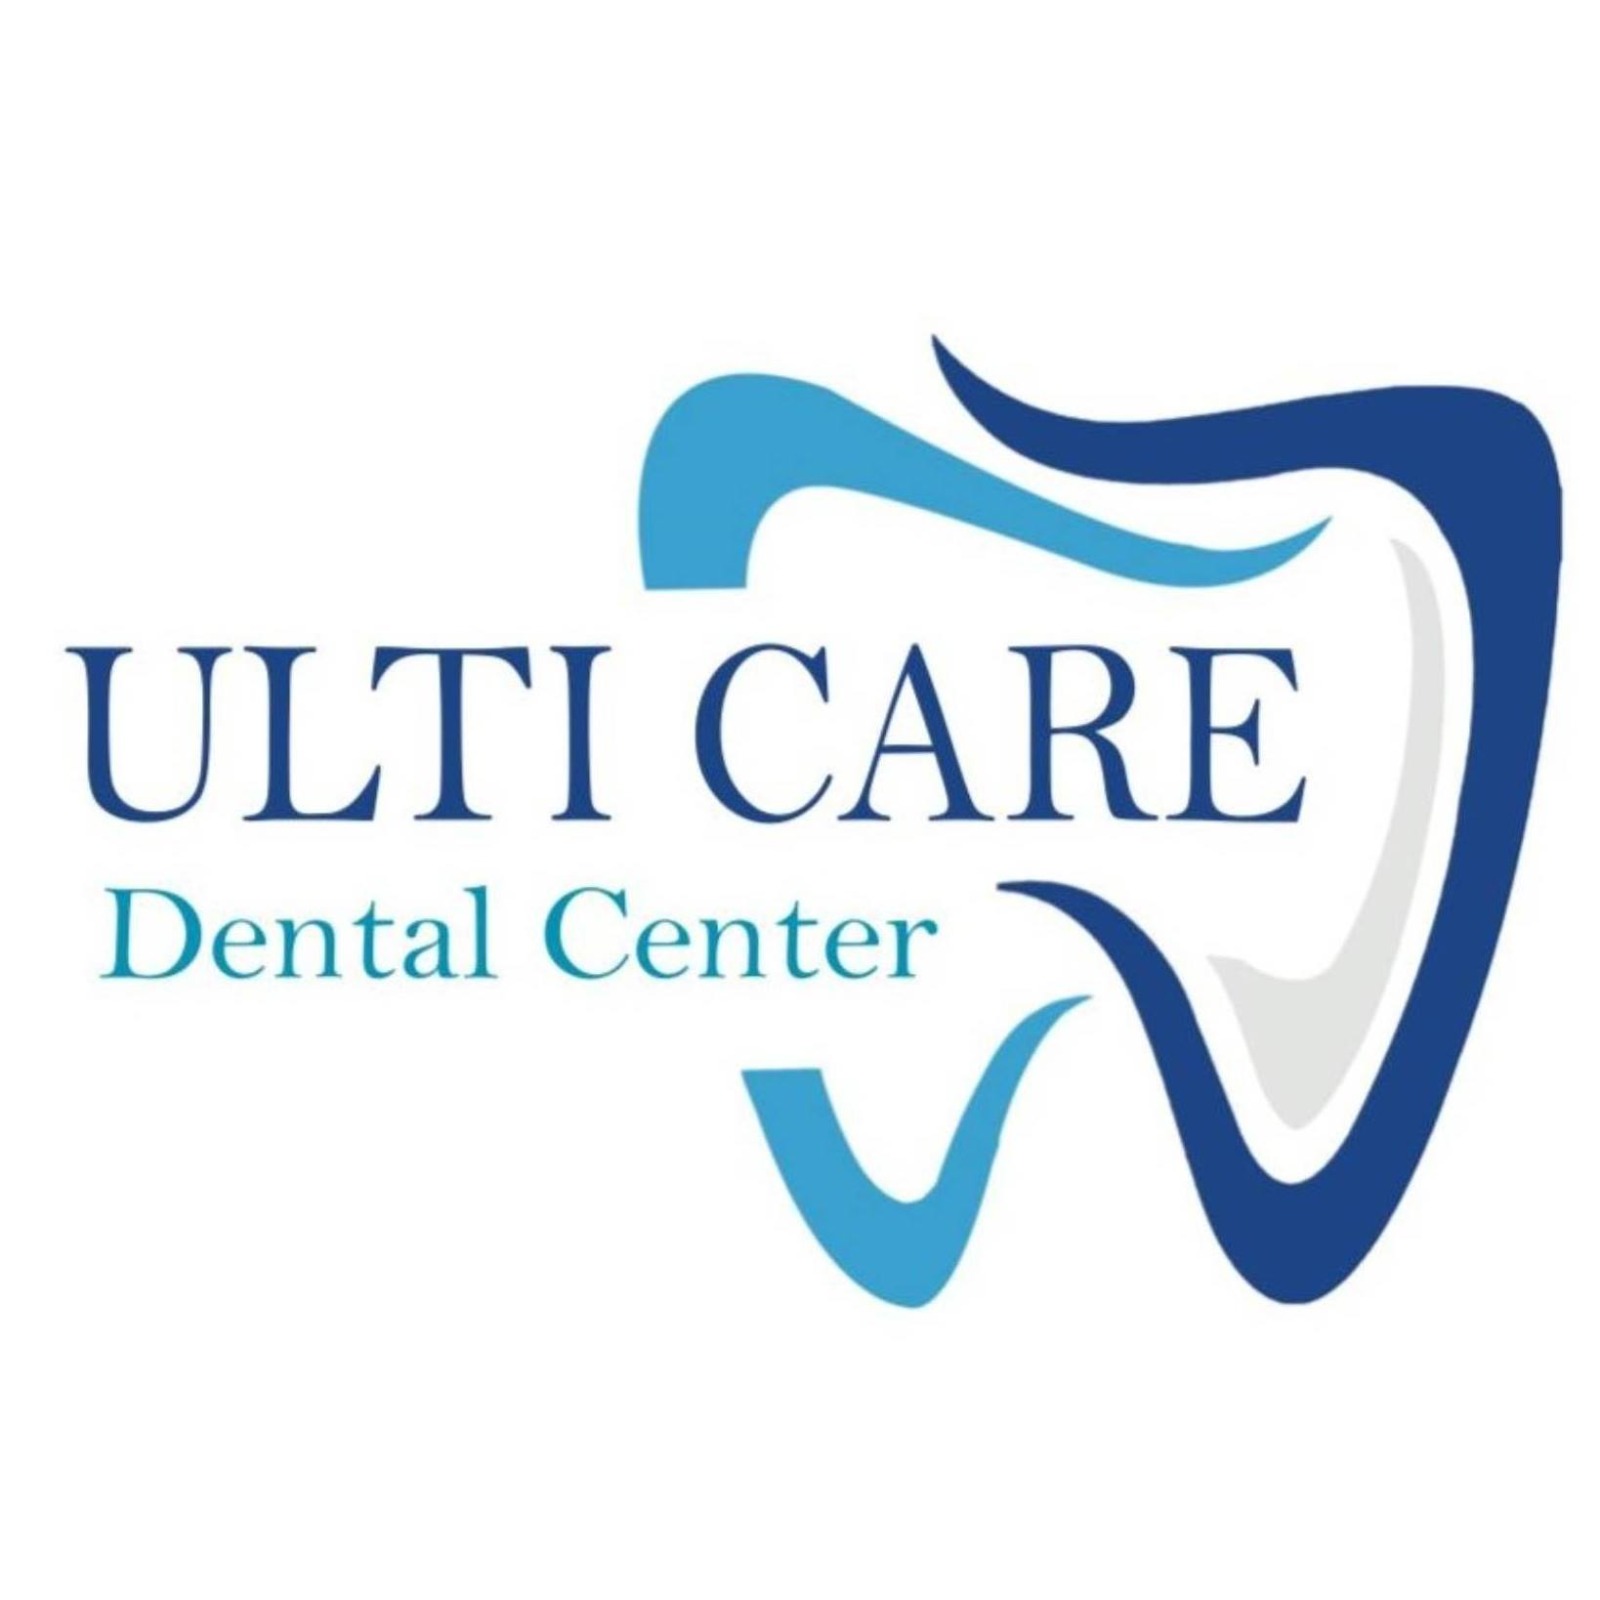 Center Ulti Care Dental